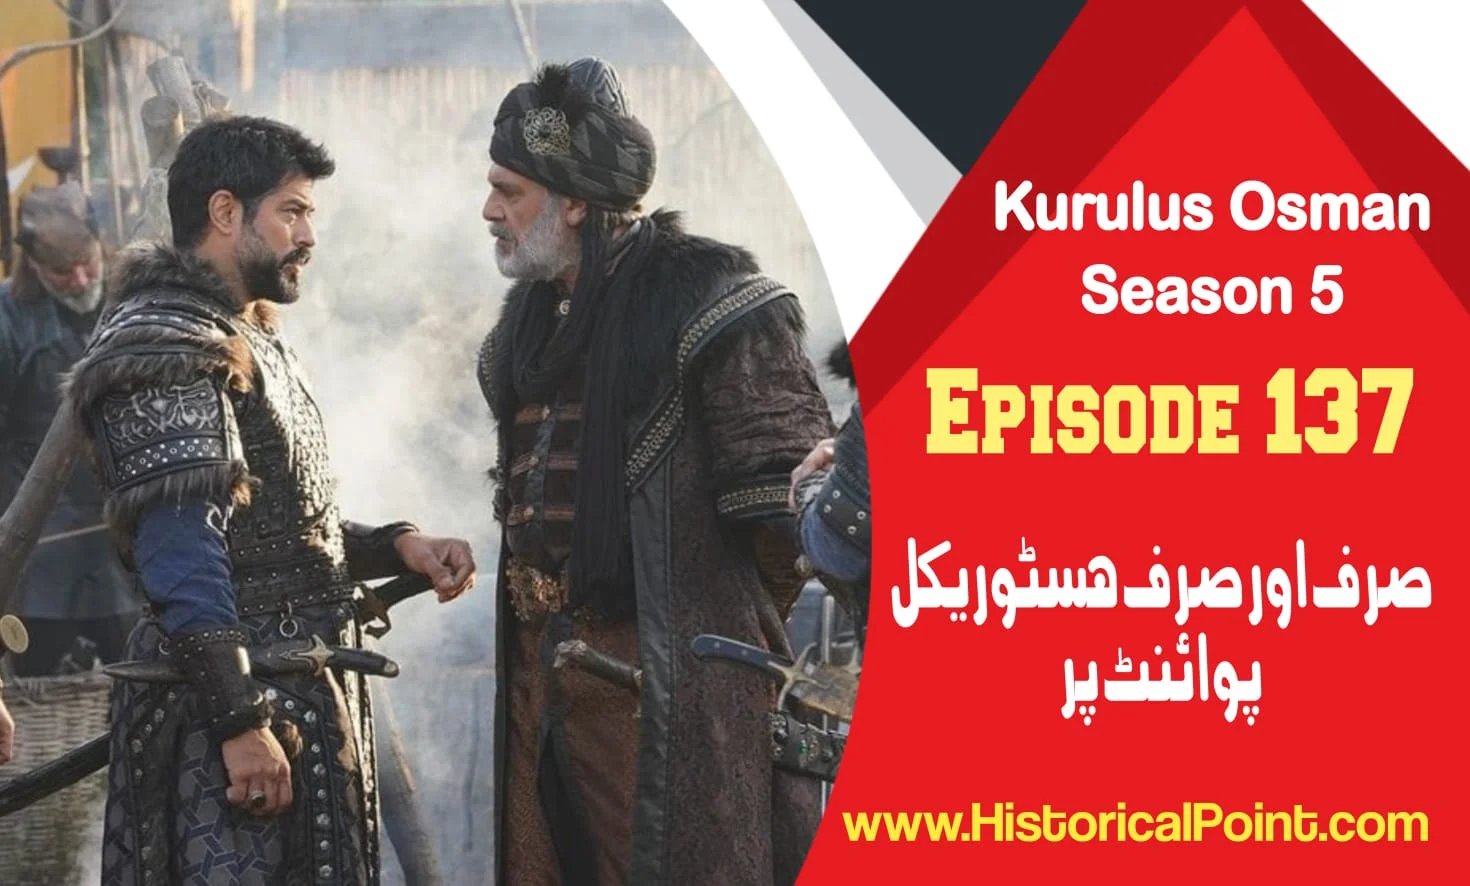 Kurulus Osman Episode 137 in urdu subtitles